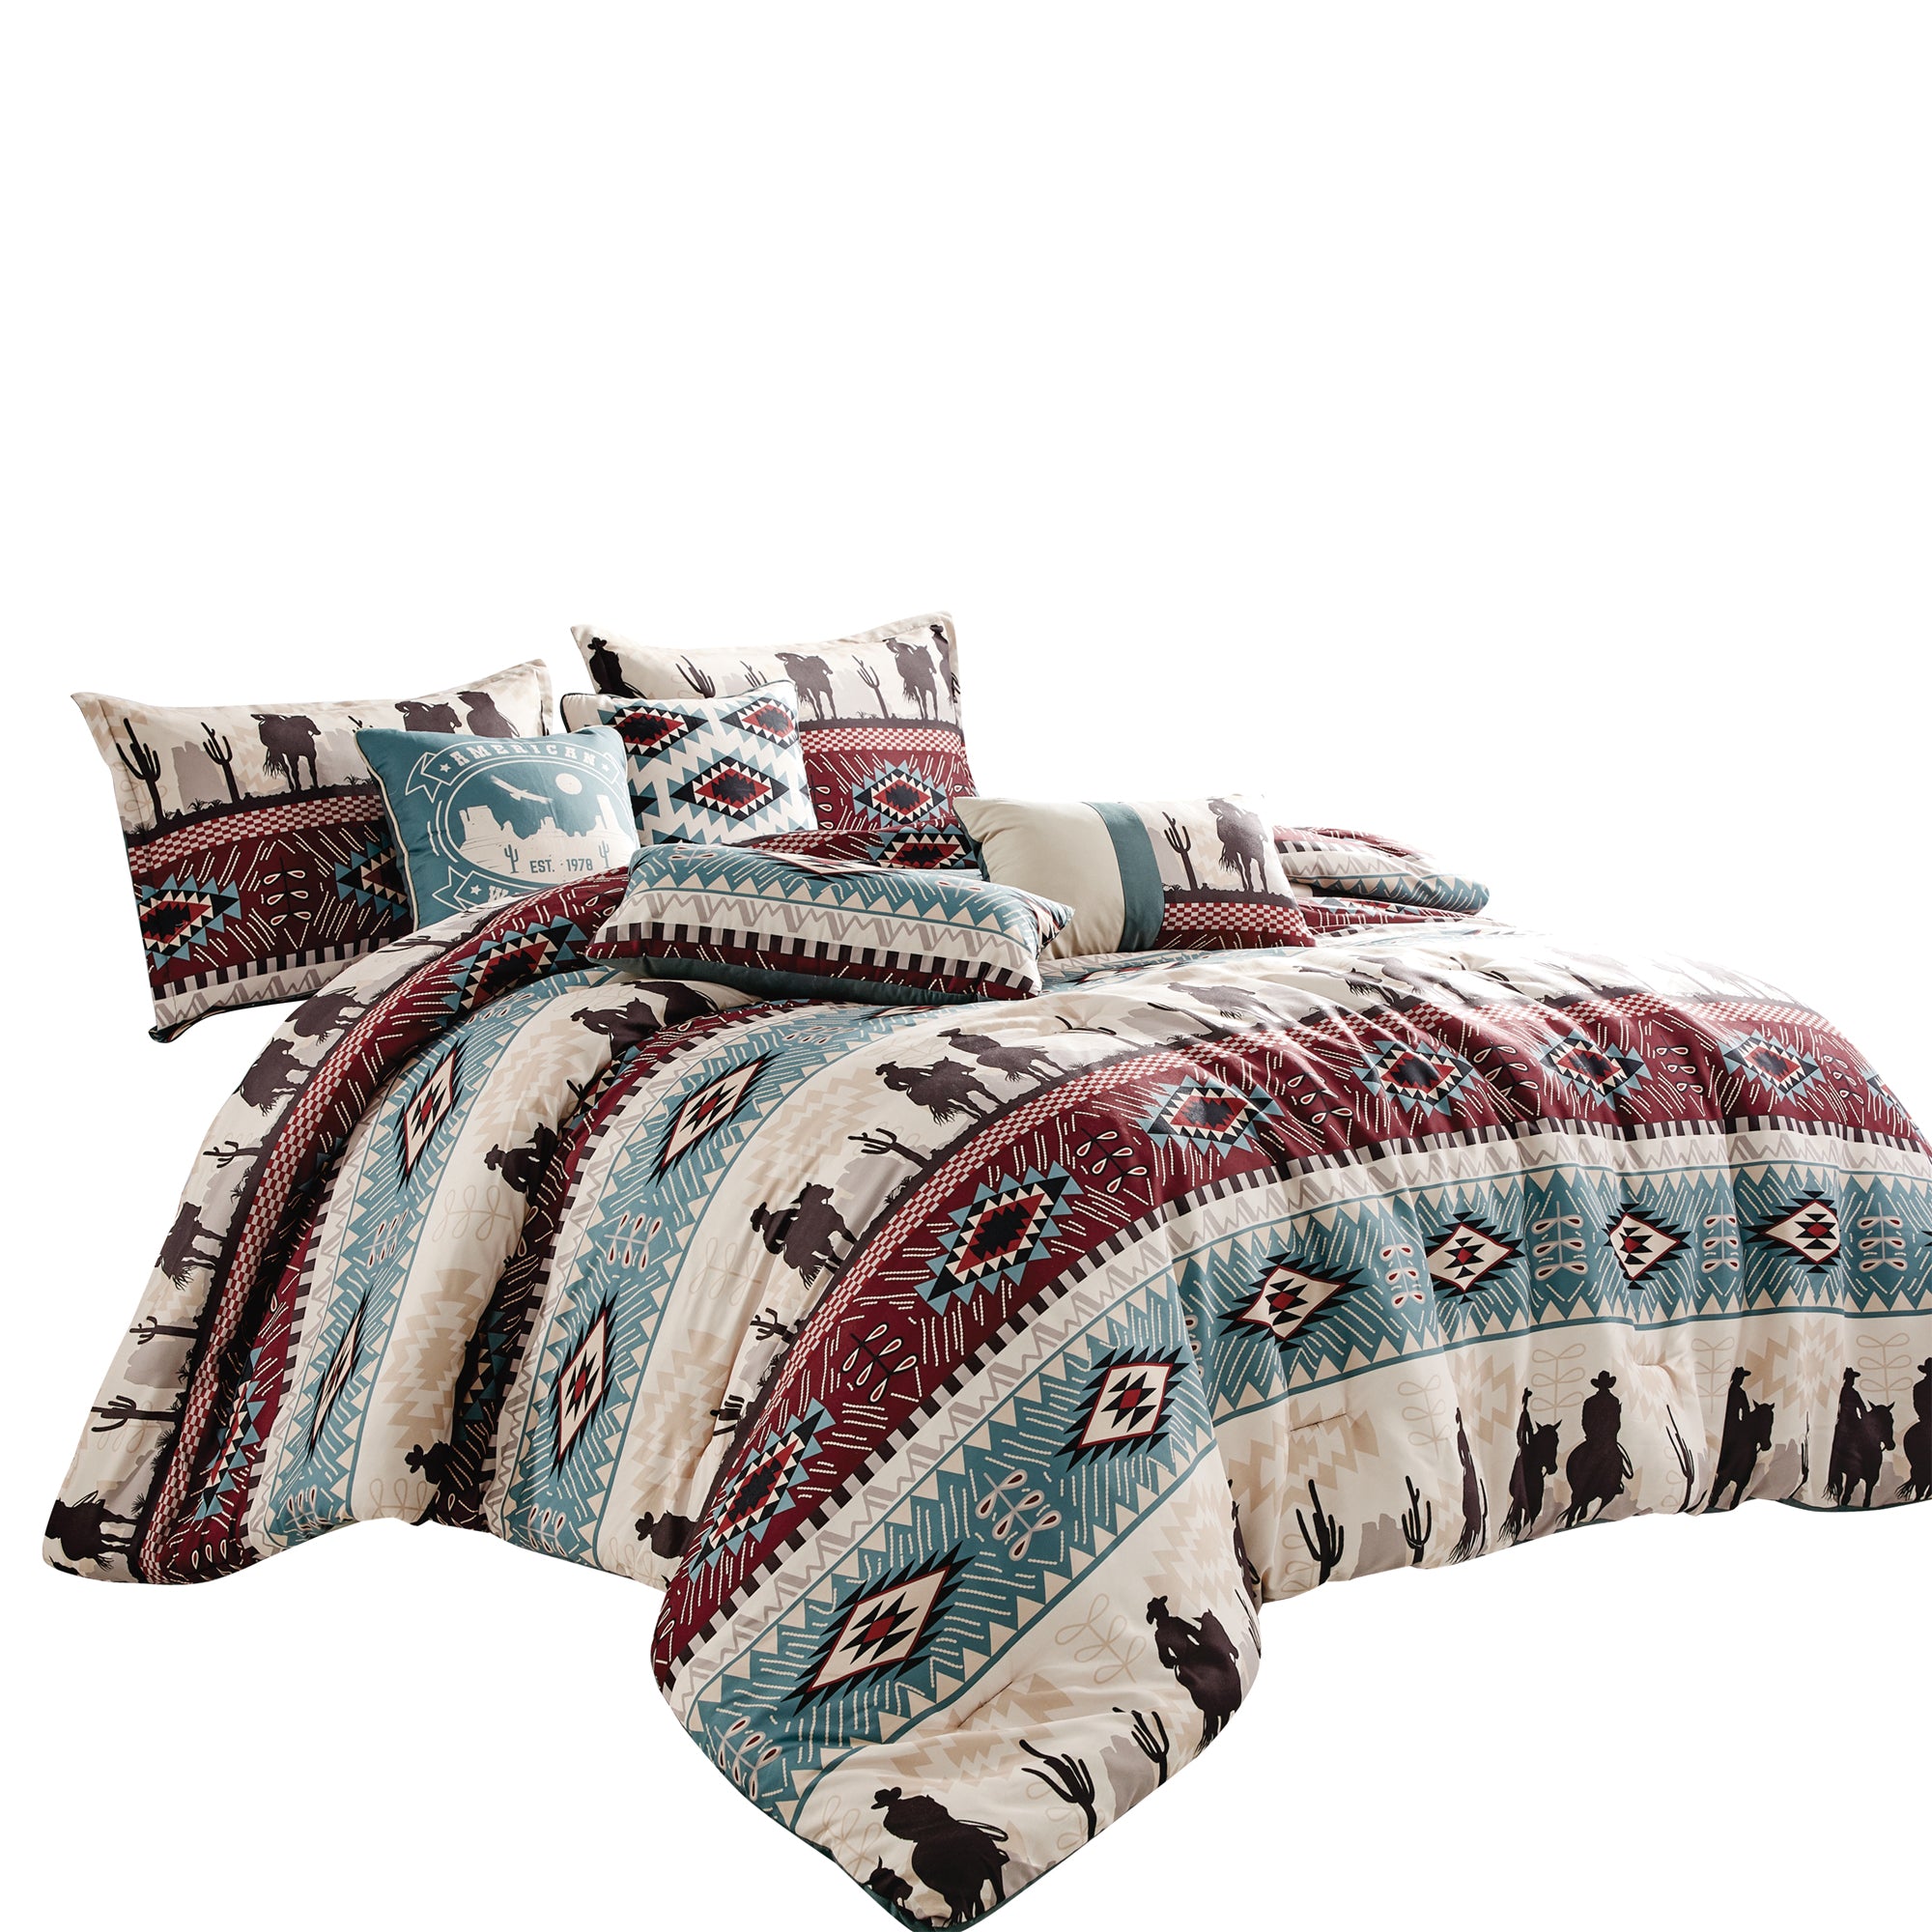 7 Pieces Rustic Southwestern Cowboys Bedding Comforter Set